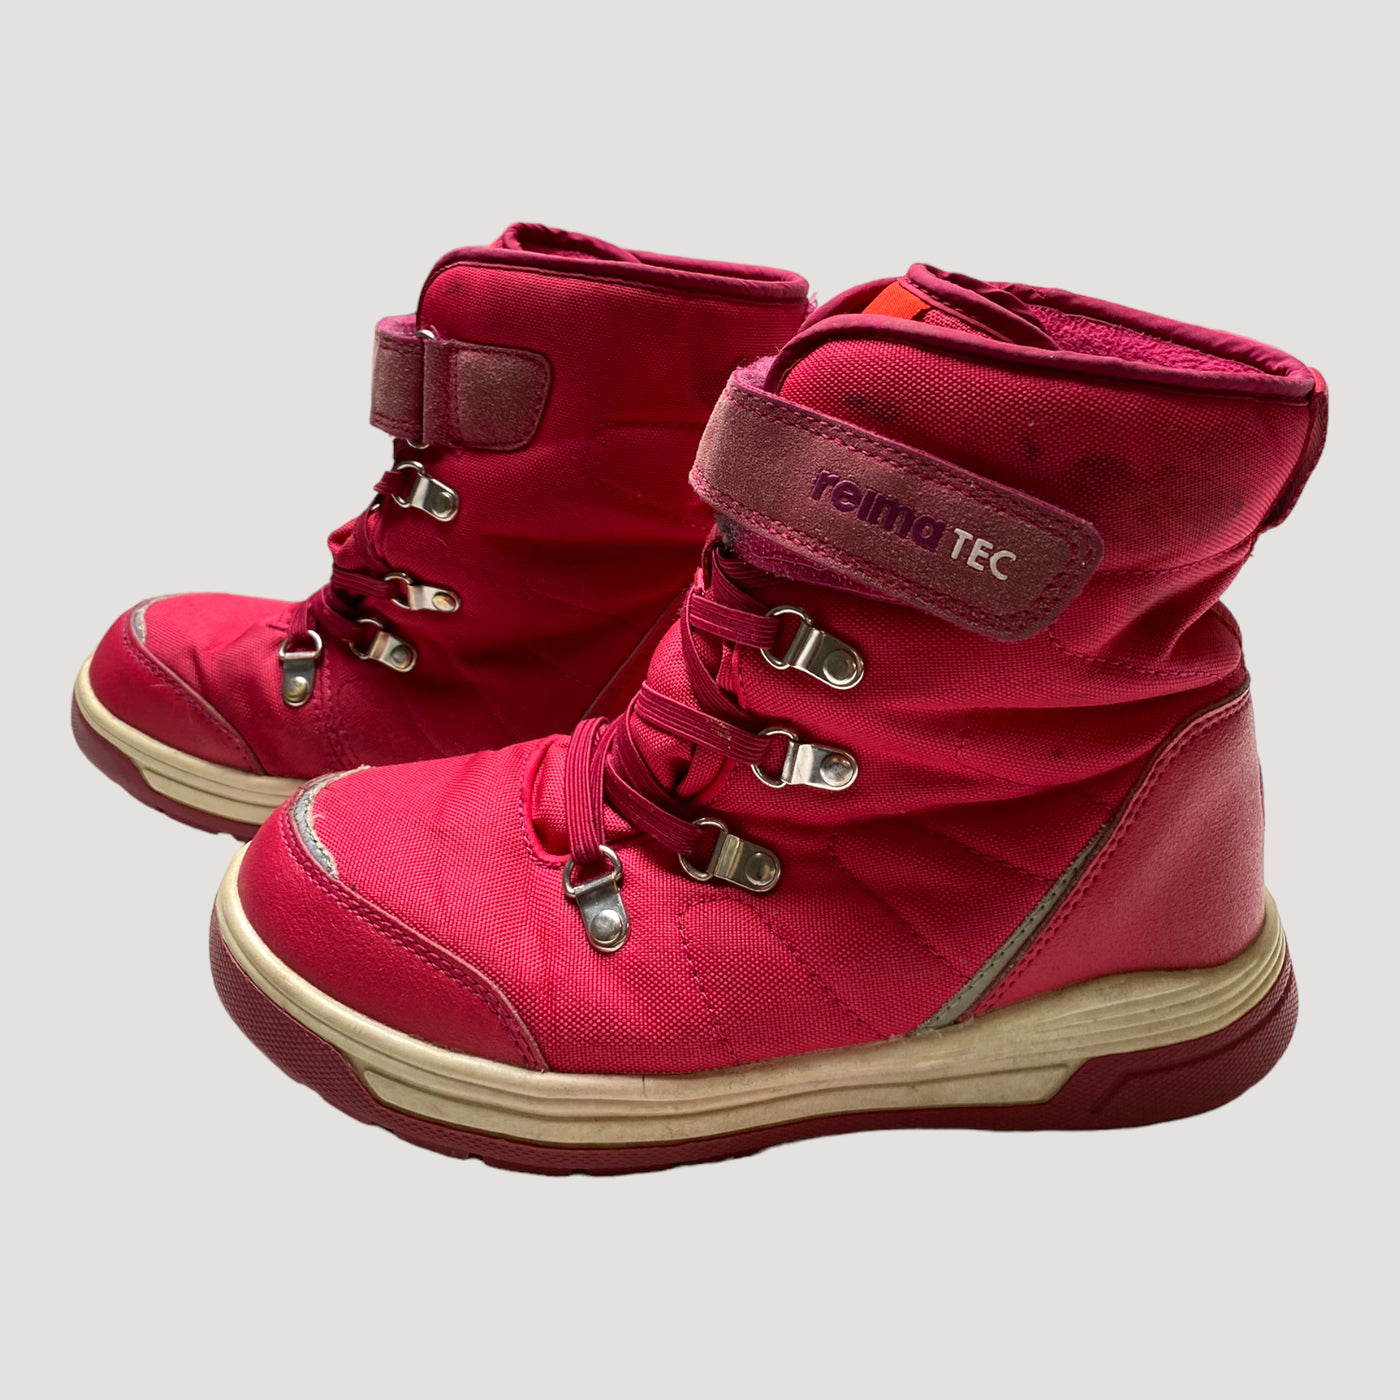 Reima midseason shoes, hot pink | 35